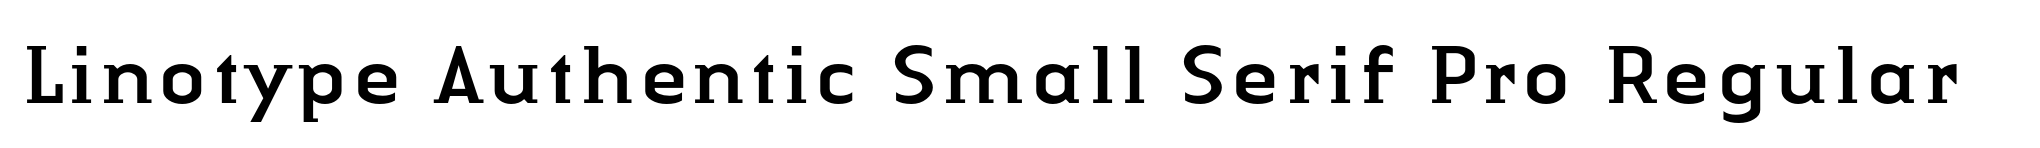 Linotype Authentic Small Serif Pro Regular image